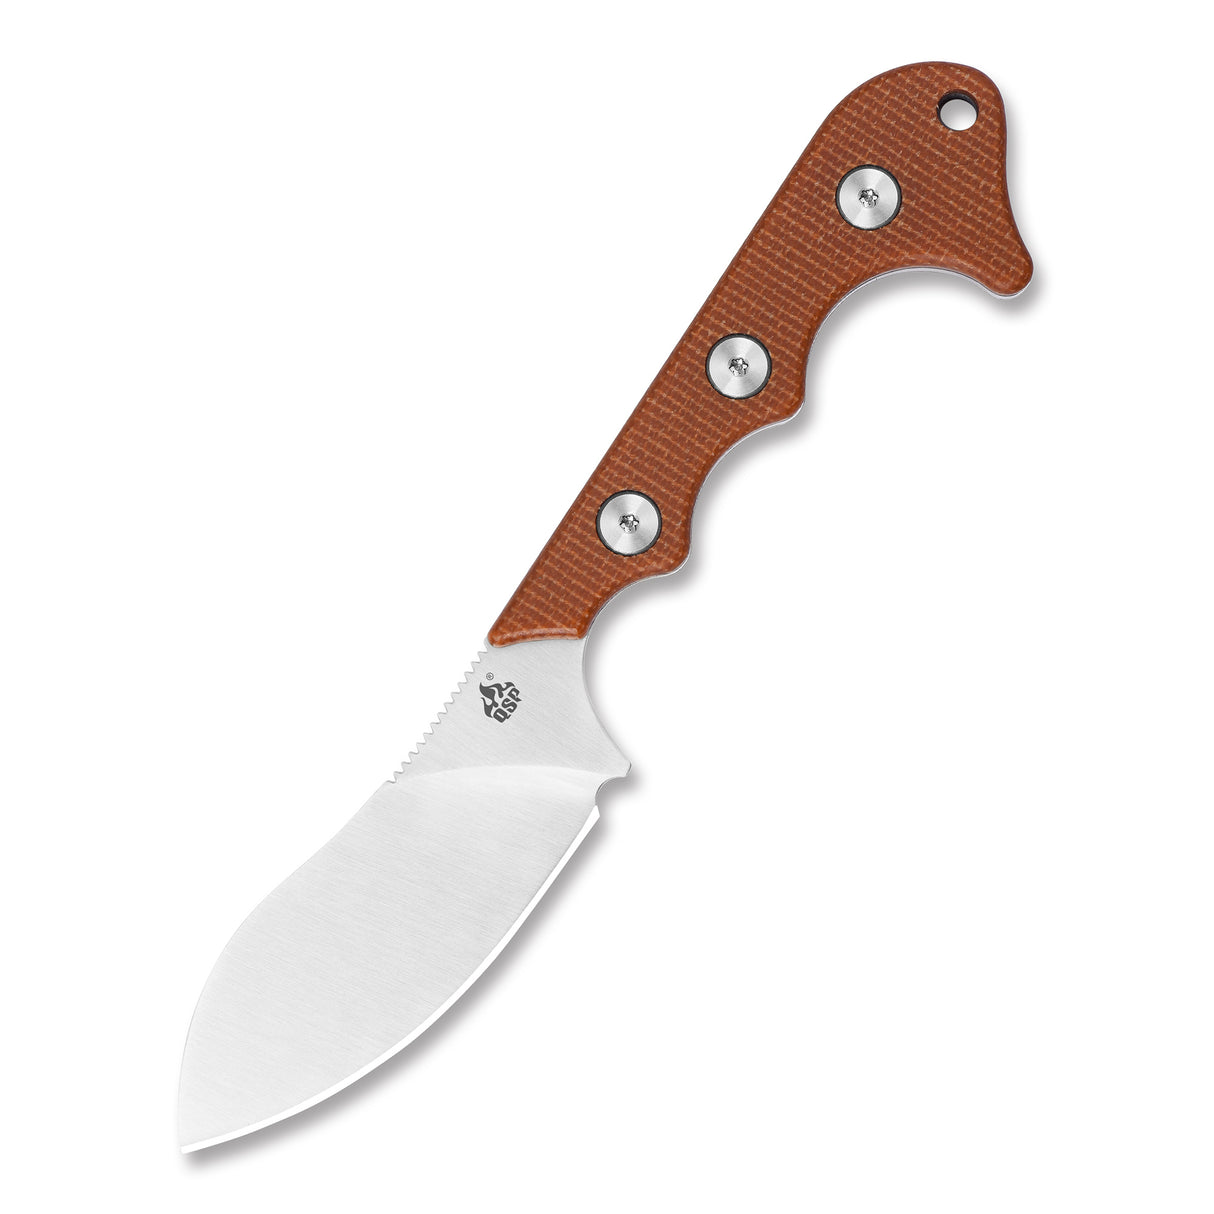 QSP Neckmuk Neck Knife D2 blade Micarta handle with Kydex sheath